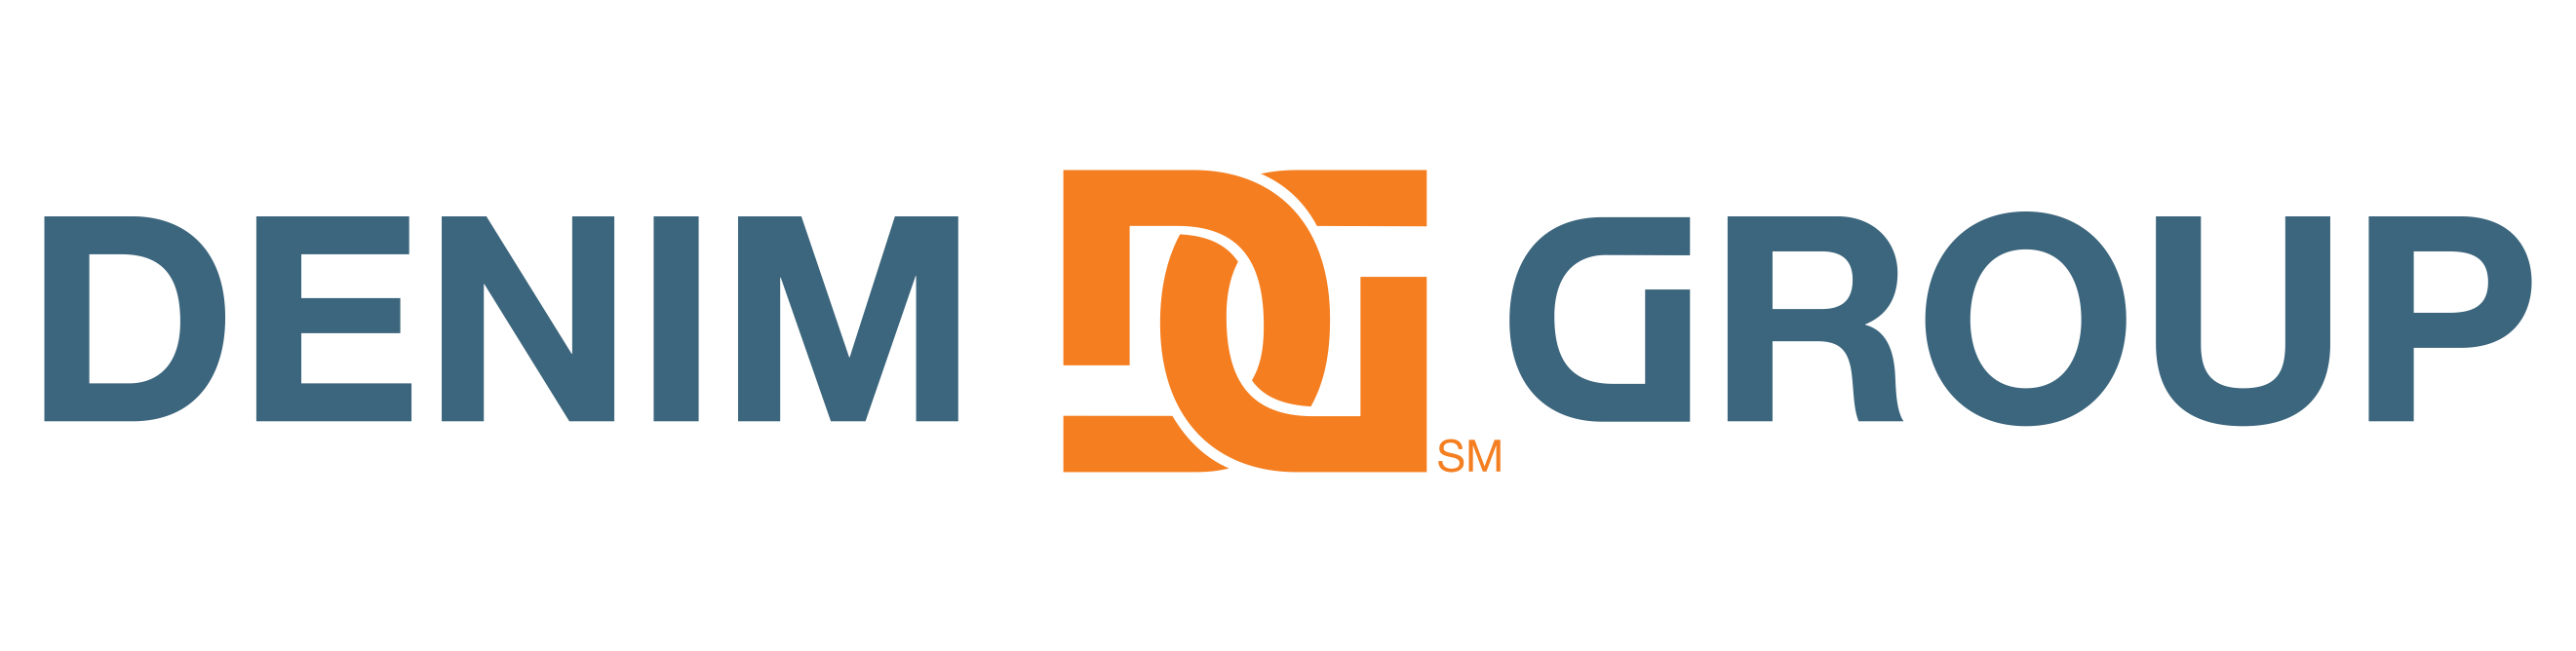 Denim Group logo